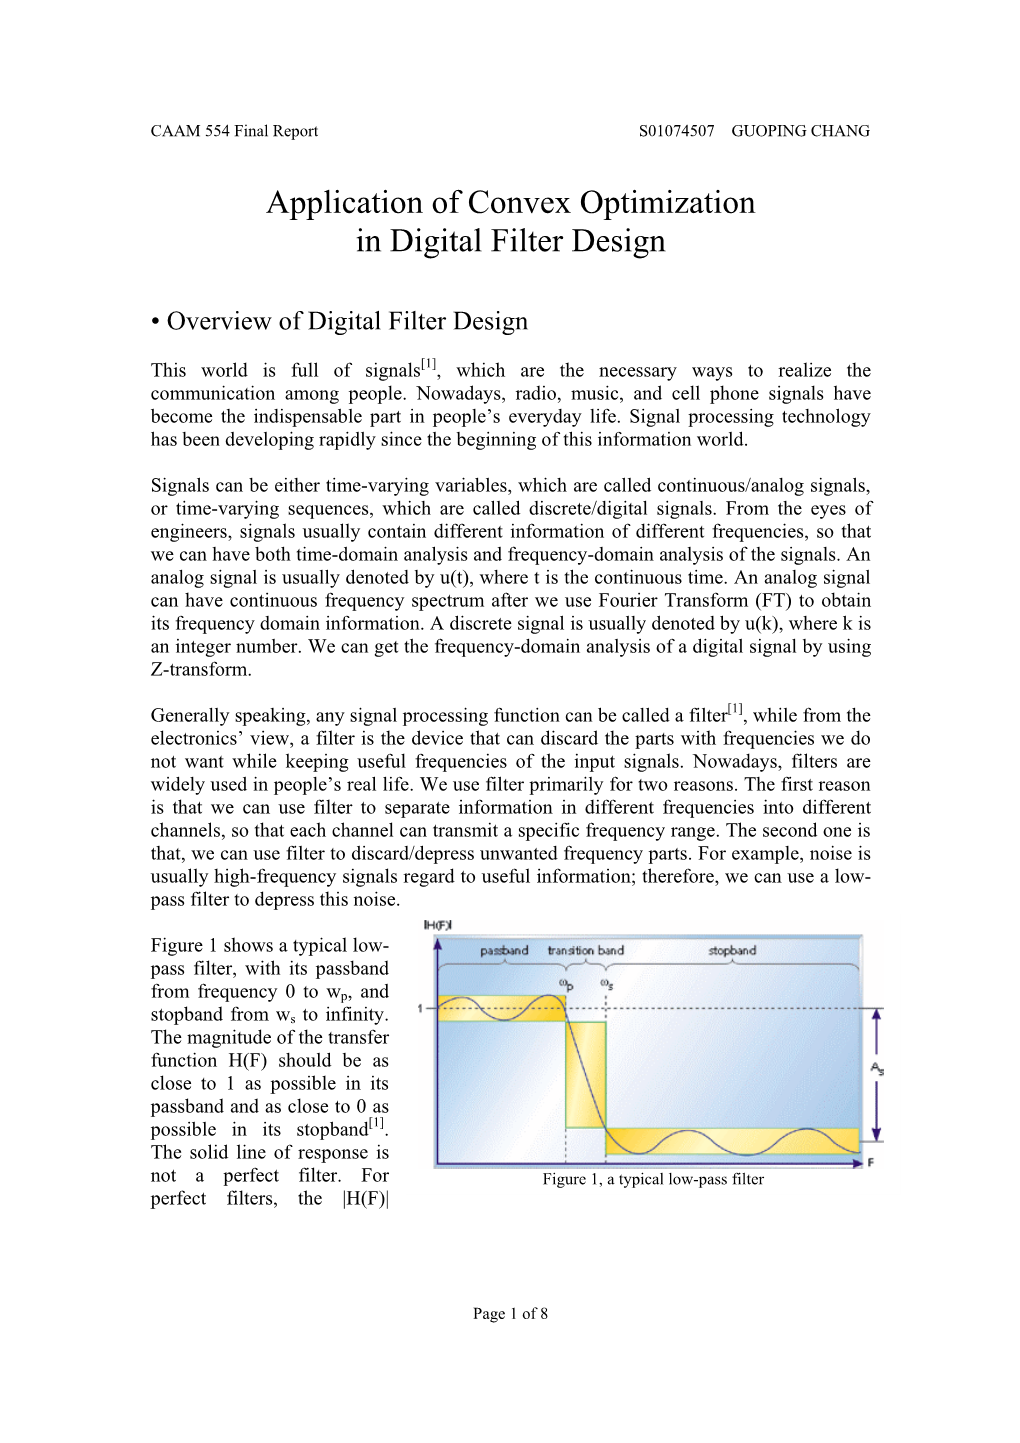 Application of Convex Optimization in Digital Filter Design